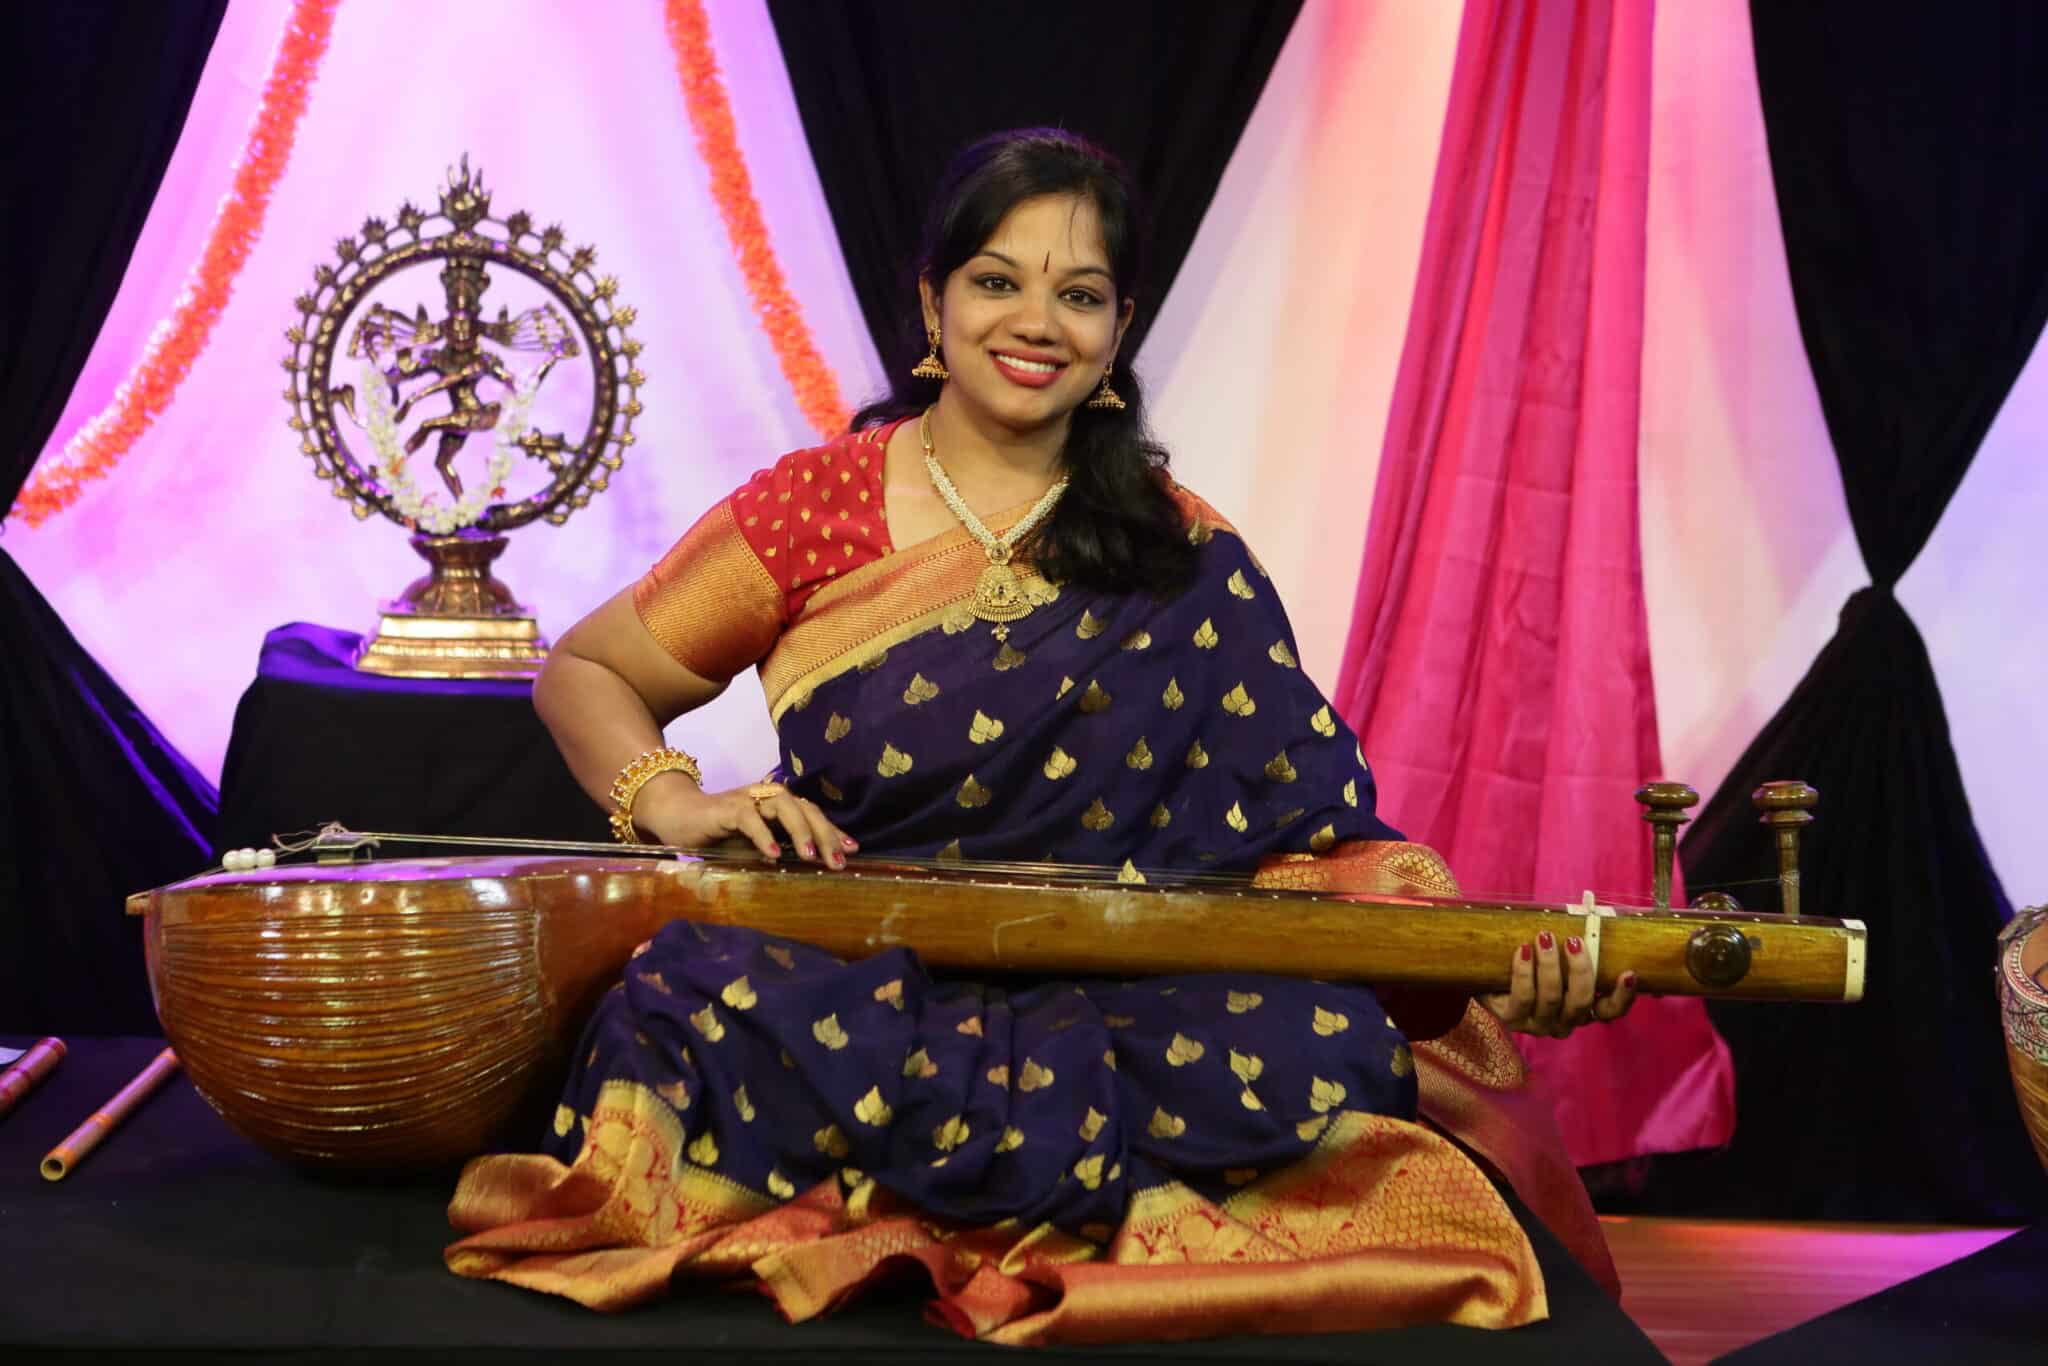 Karnatic classical vocalist Krithika Sreenivasan